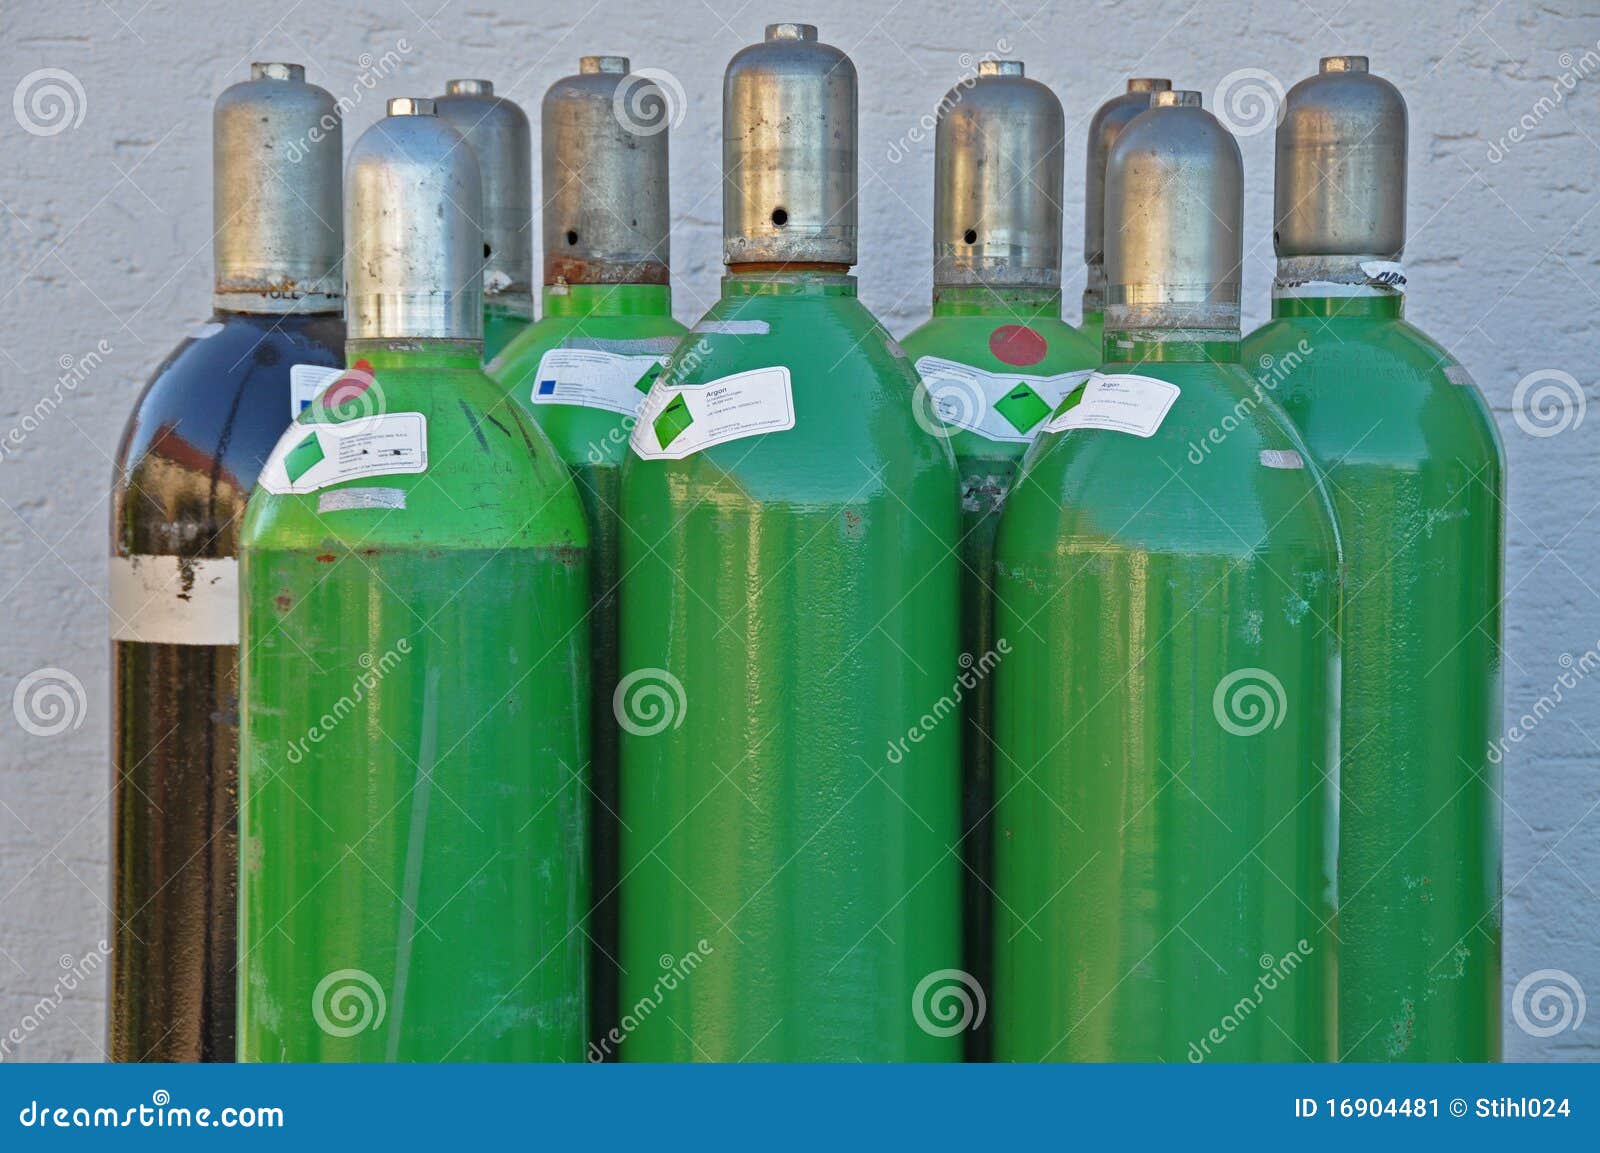 argon gas bottles